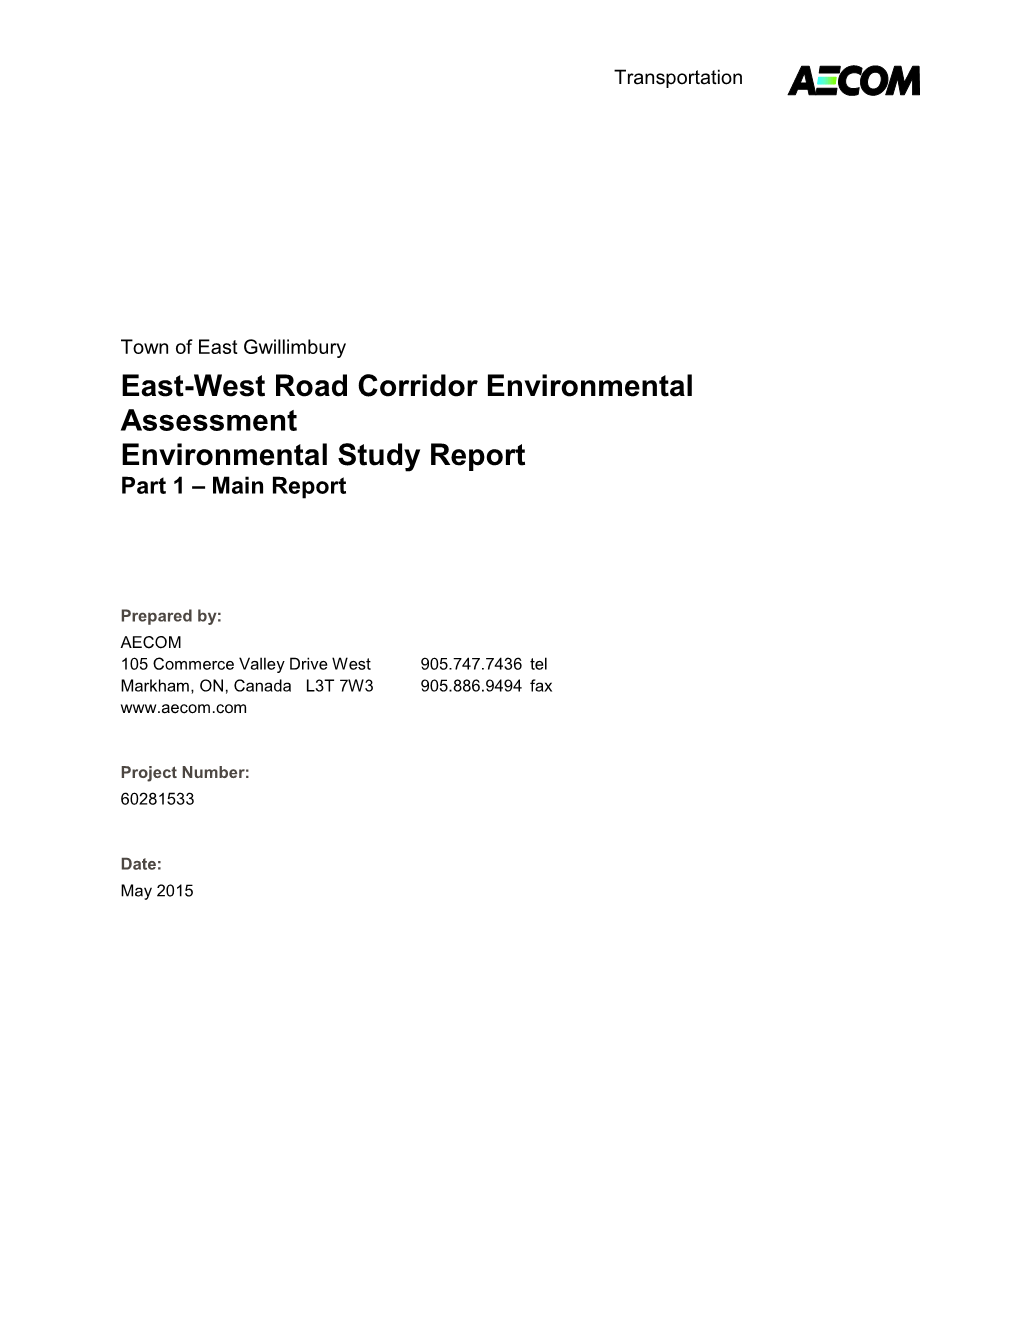 East-West Road Corridor Environmental Assessment Environmental Study Report Part 1 – Main Report